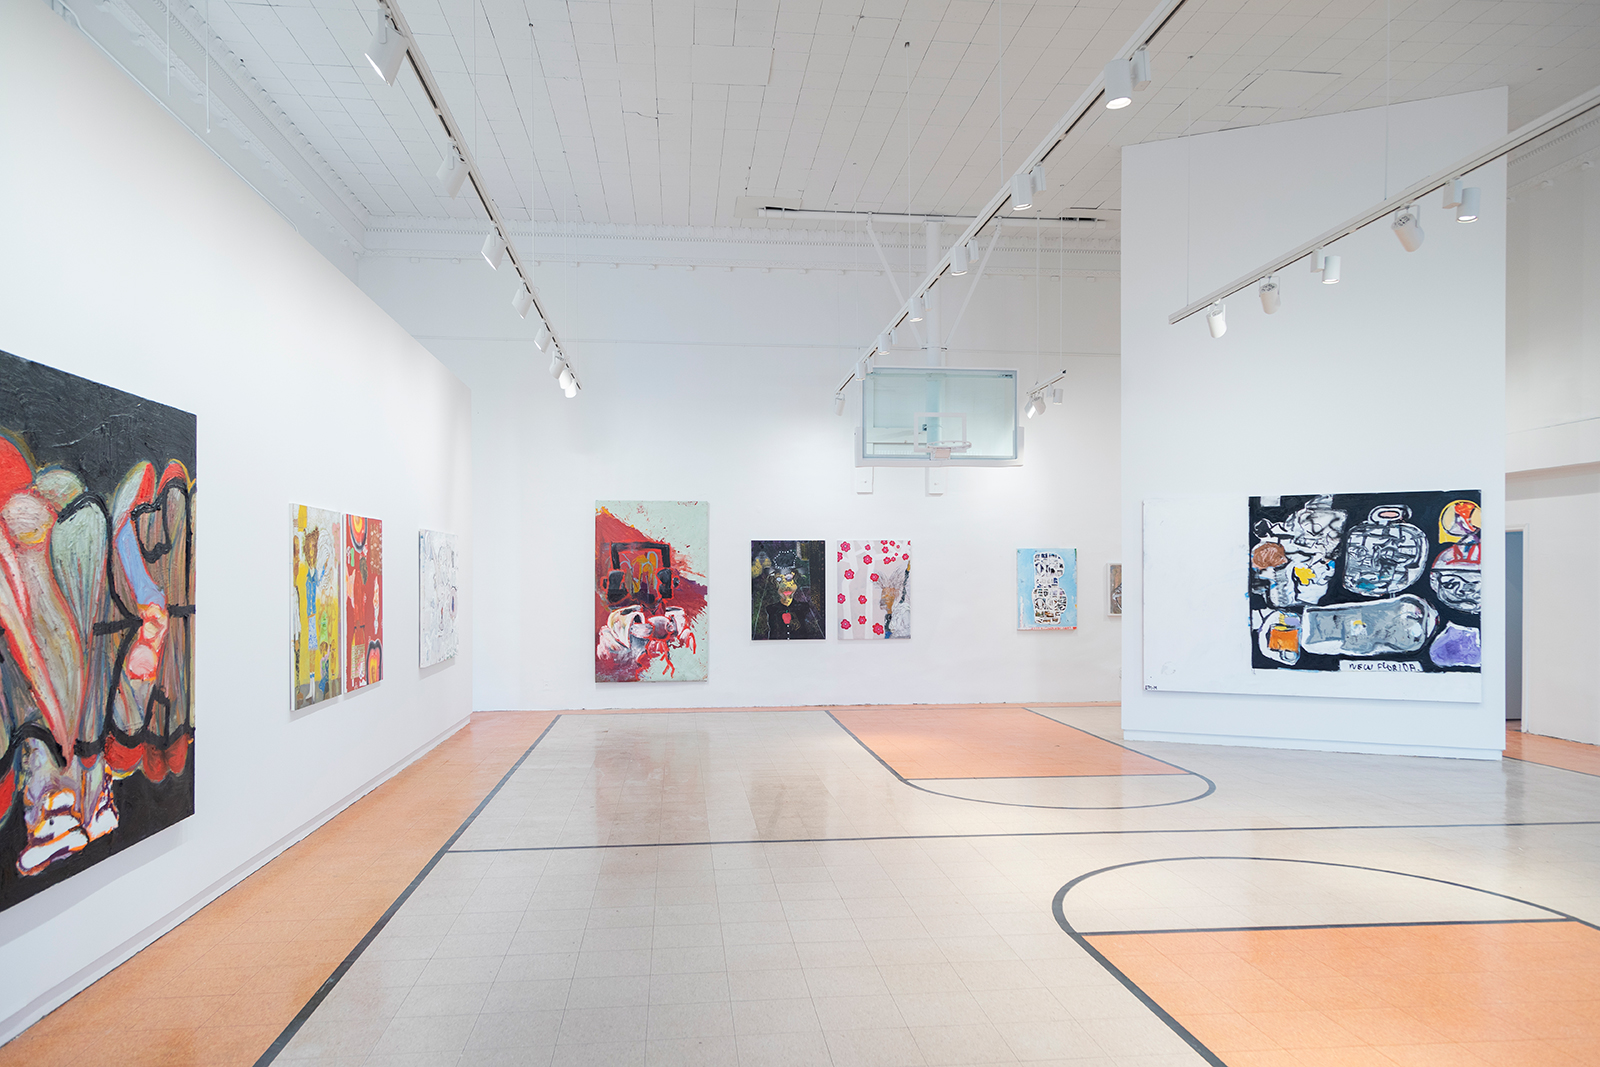 Reyes Finn gallery throws open its doors in Detroit